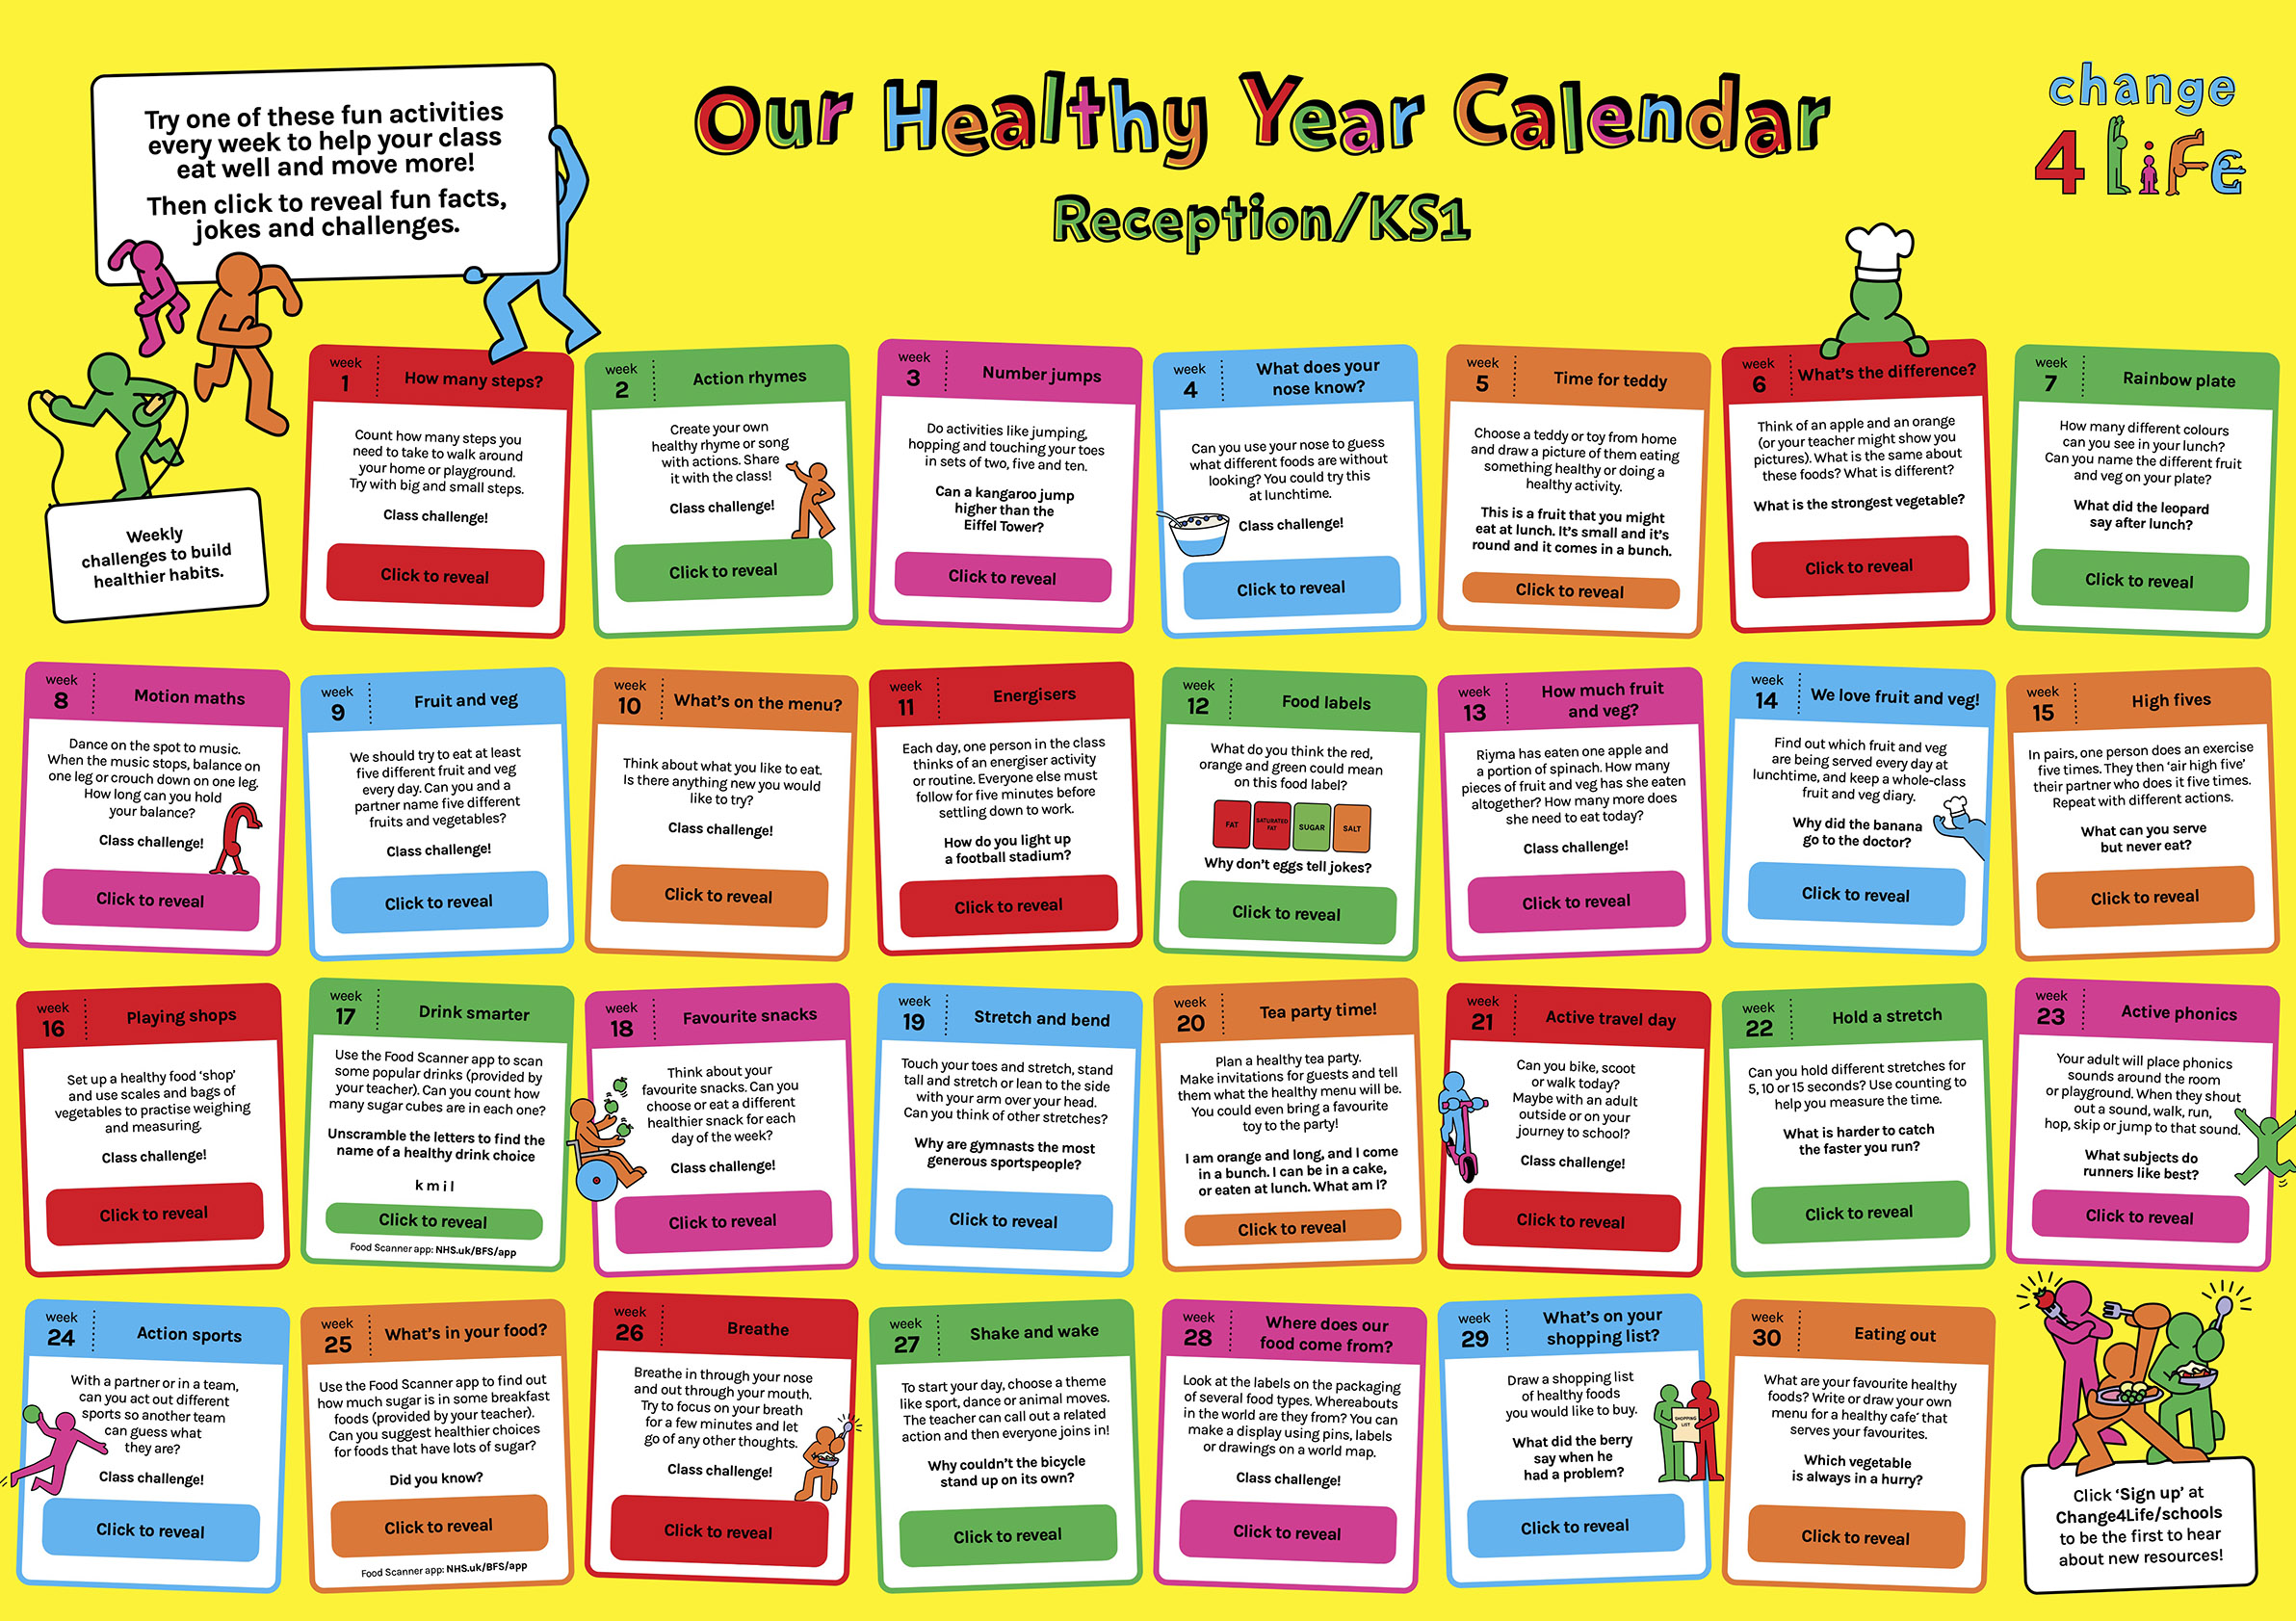 Our Healthy Year: Reception/KS1 calendar